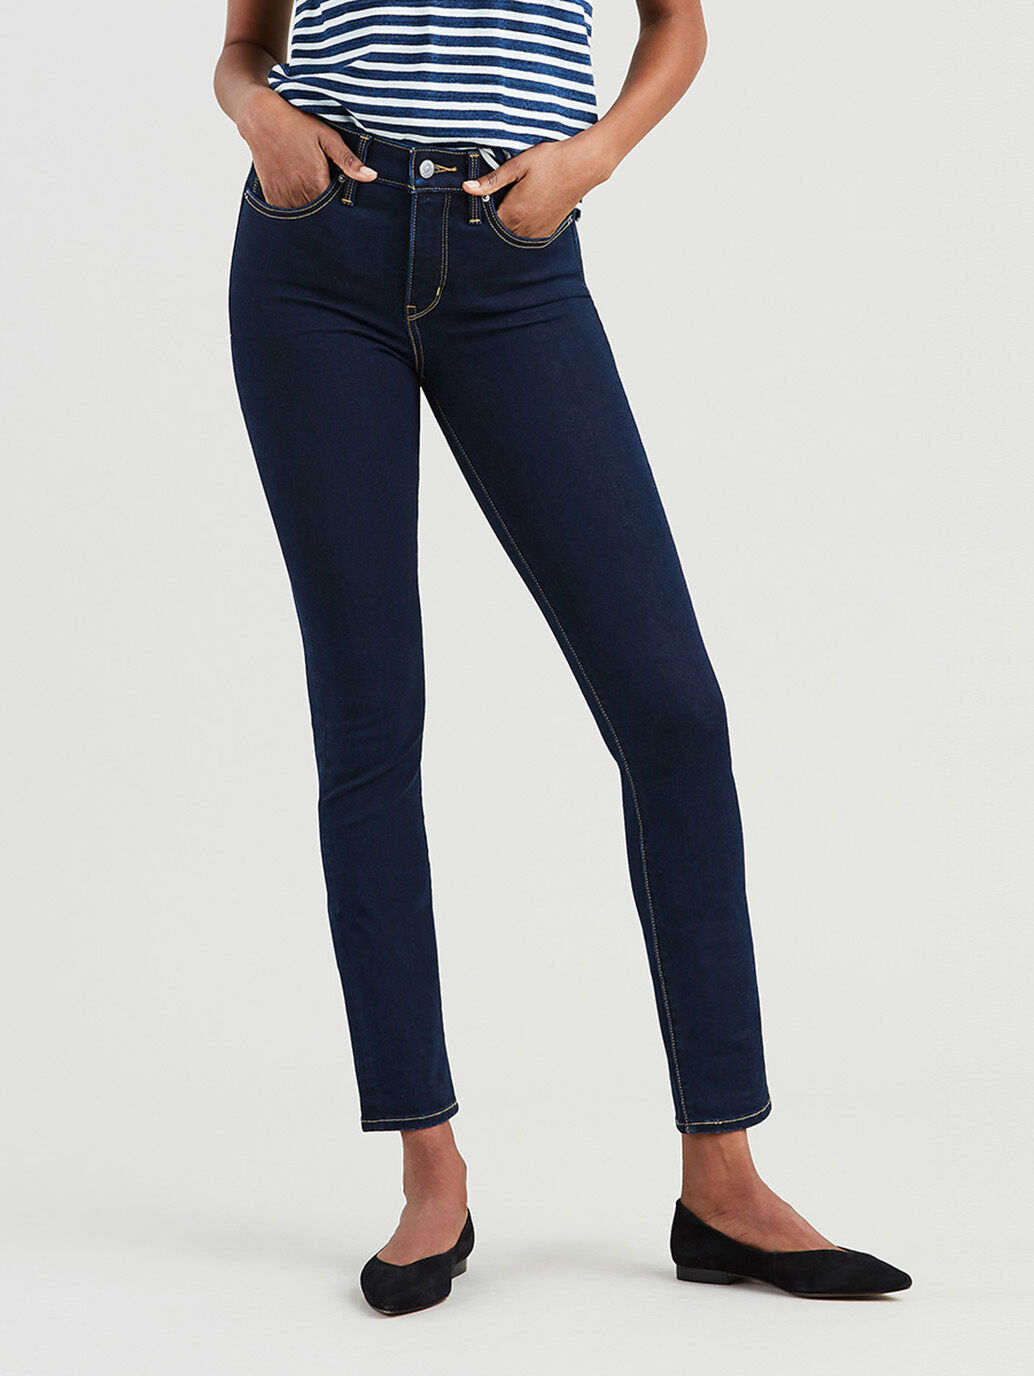 womens levi jeans australia